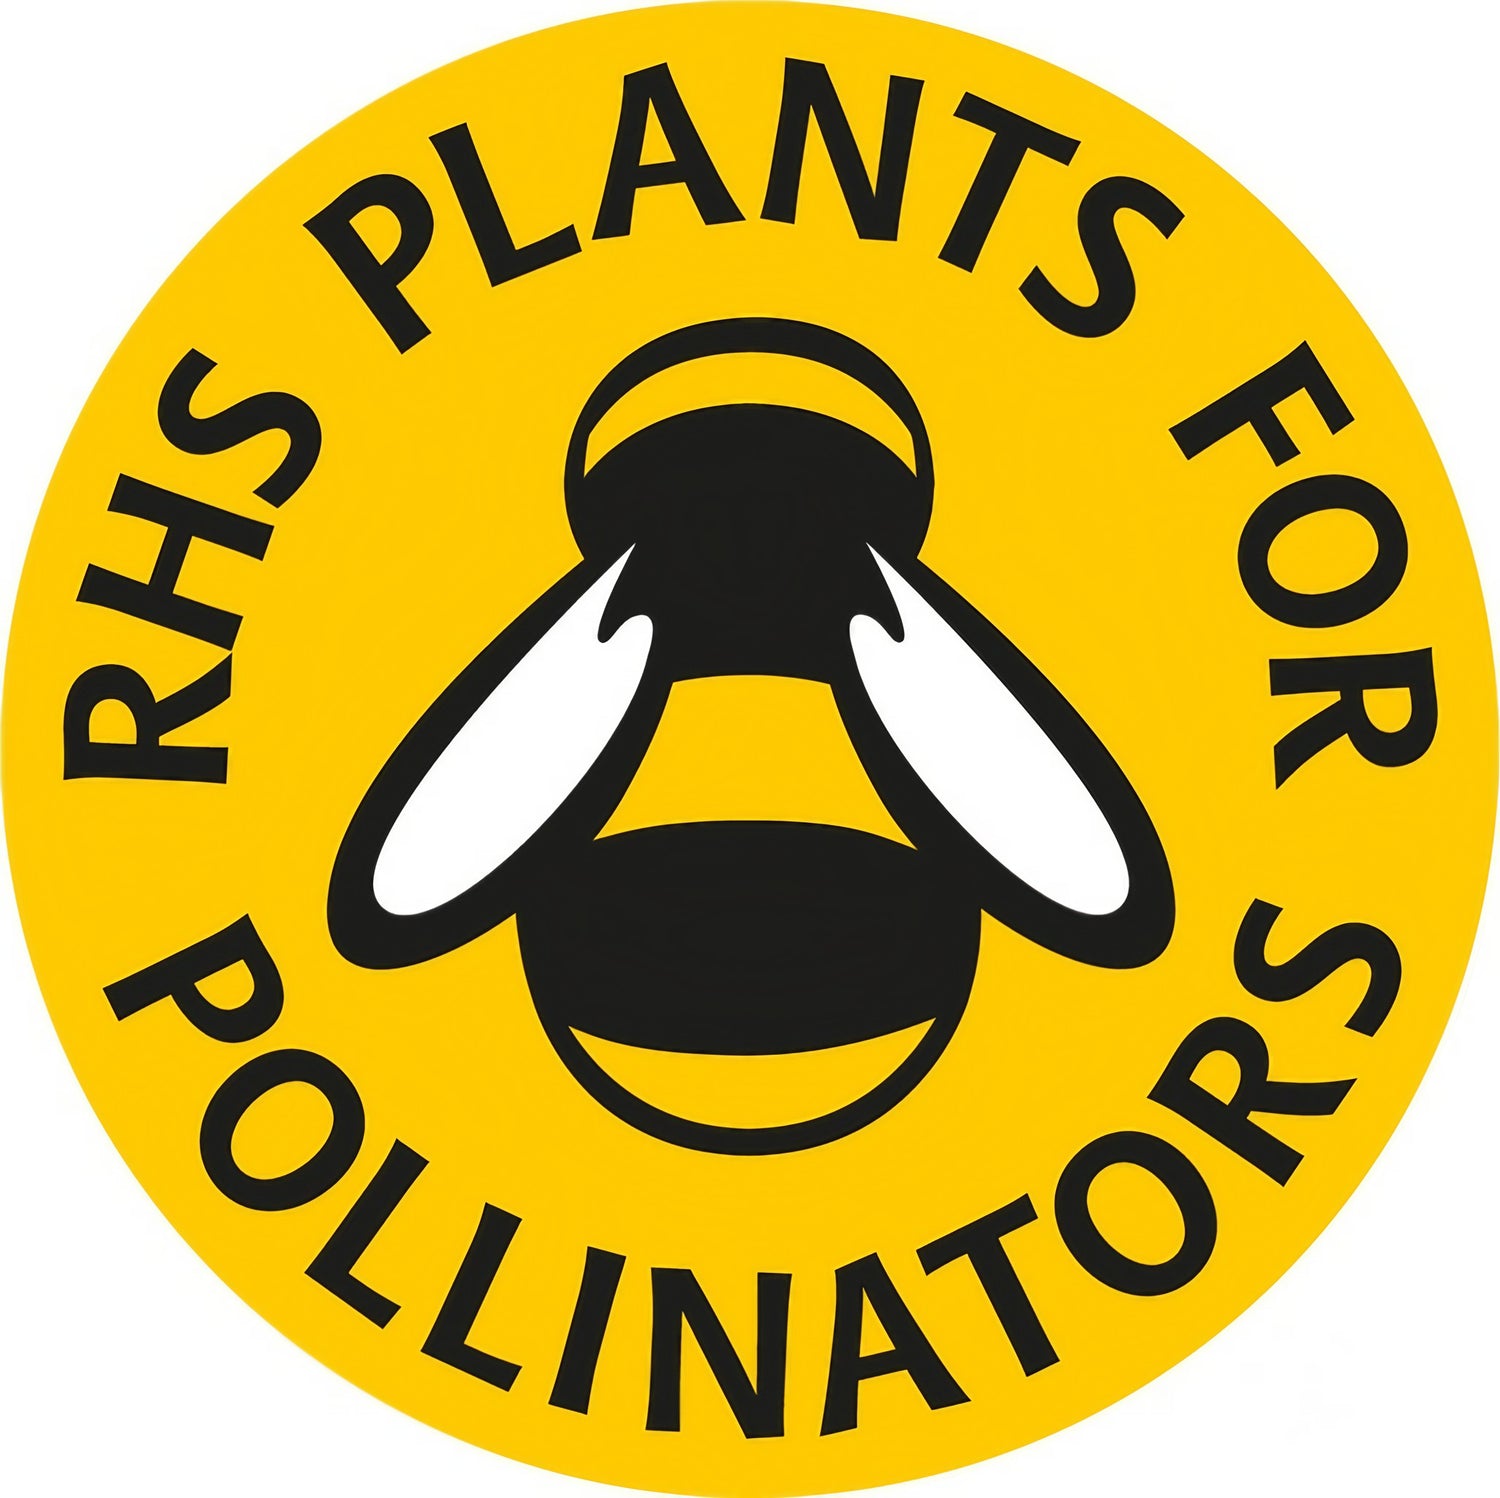 Oxeye Daisy plants certified as pollinator-friendly